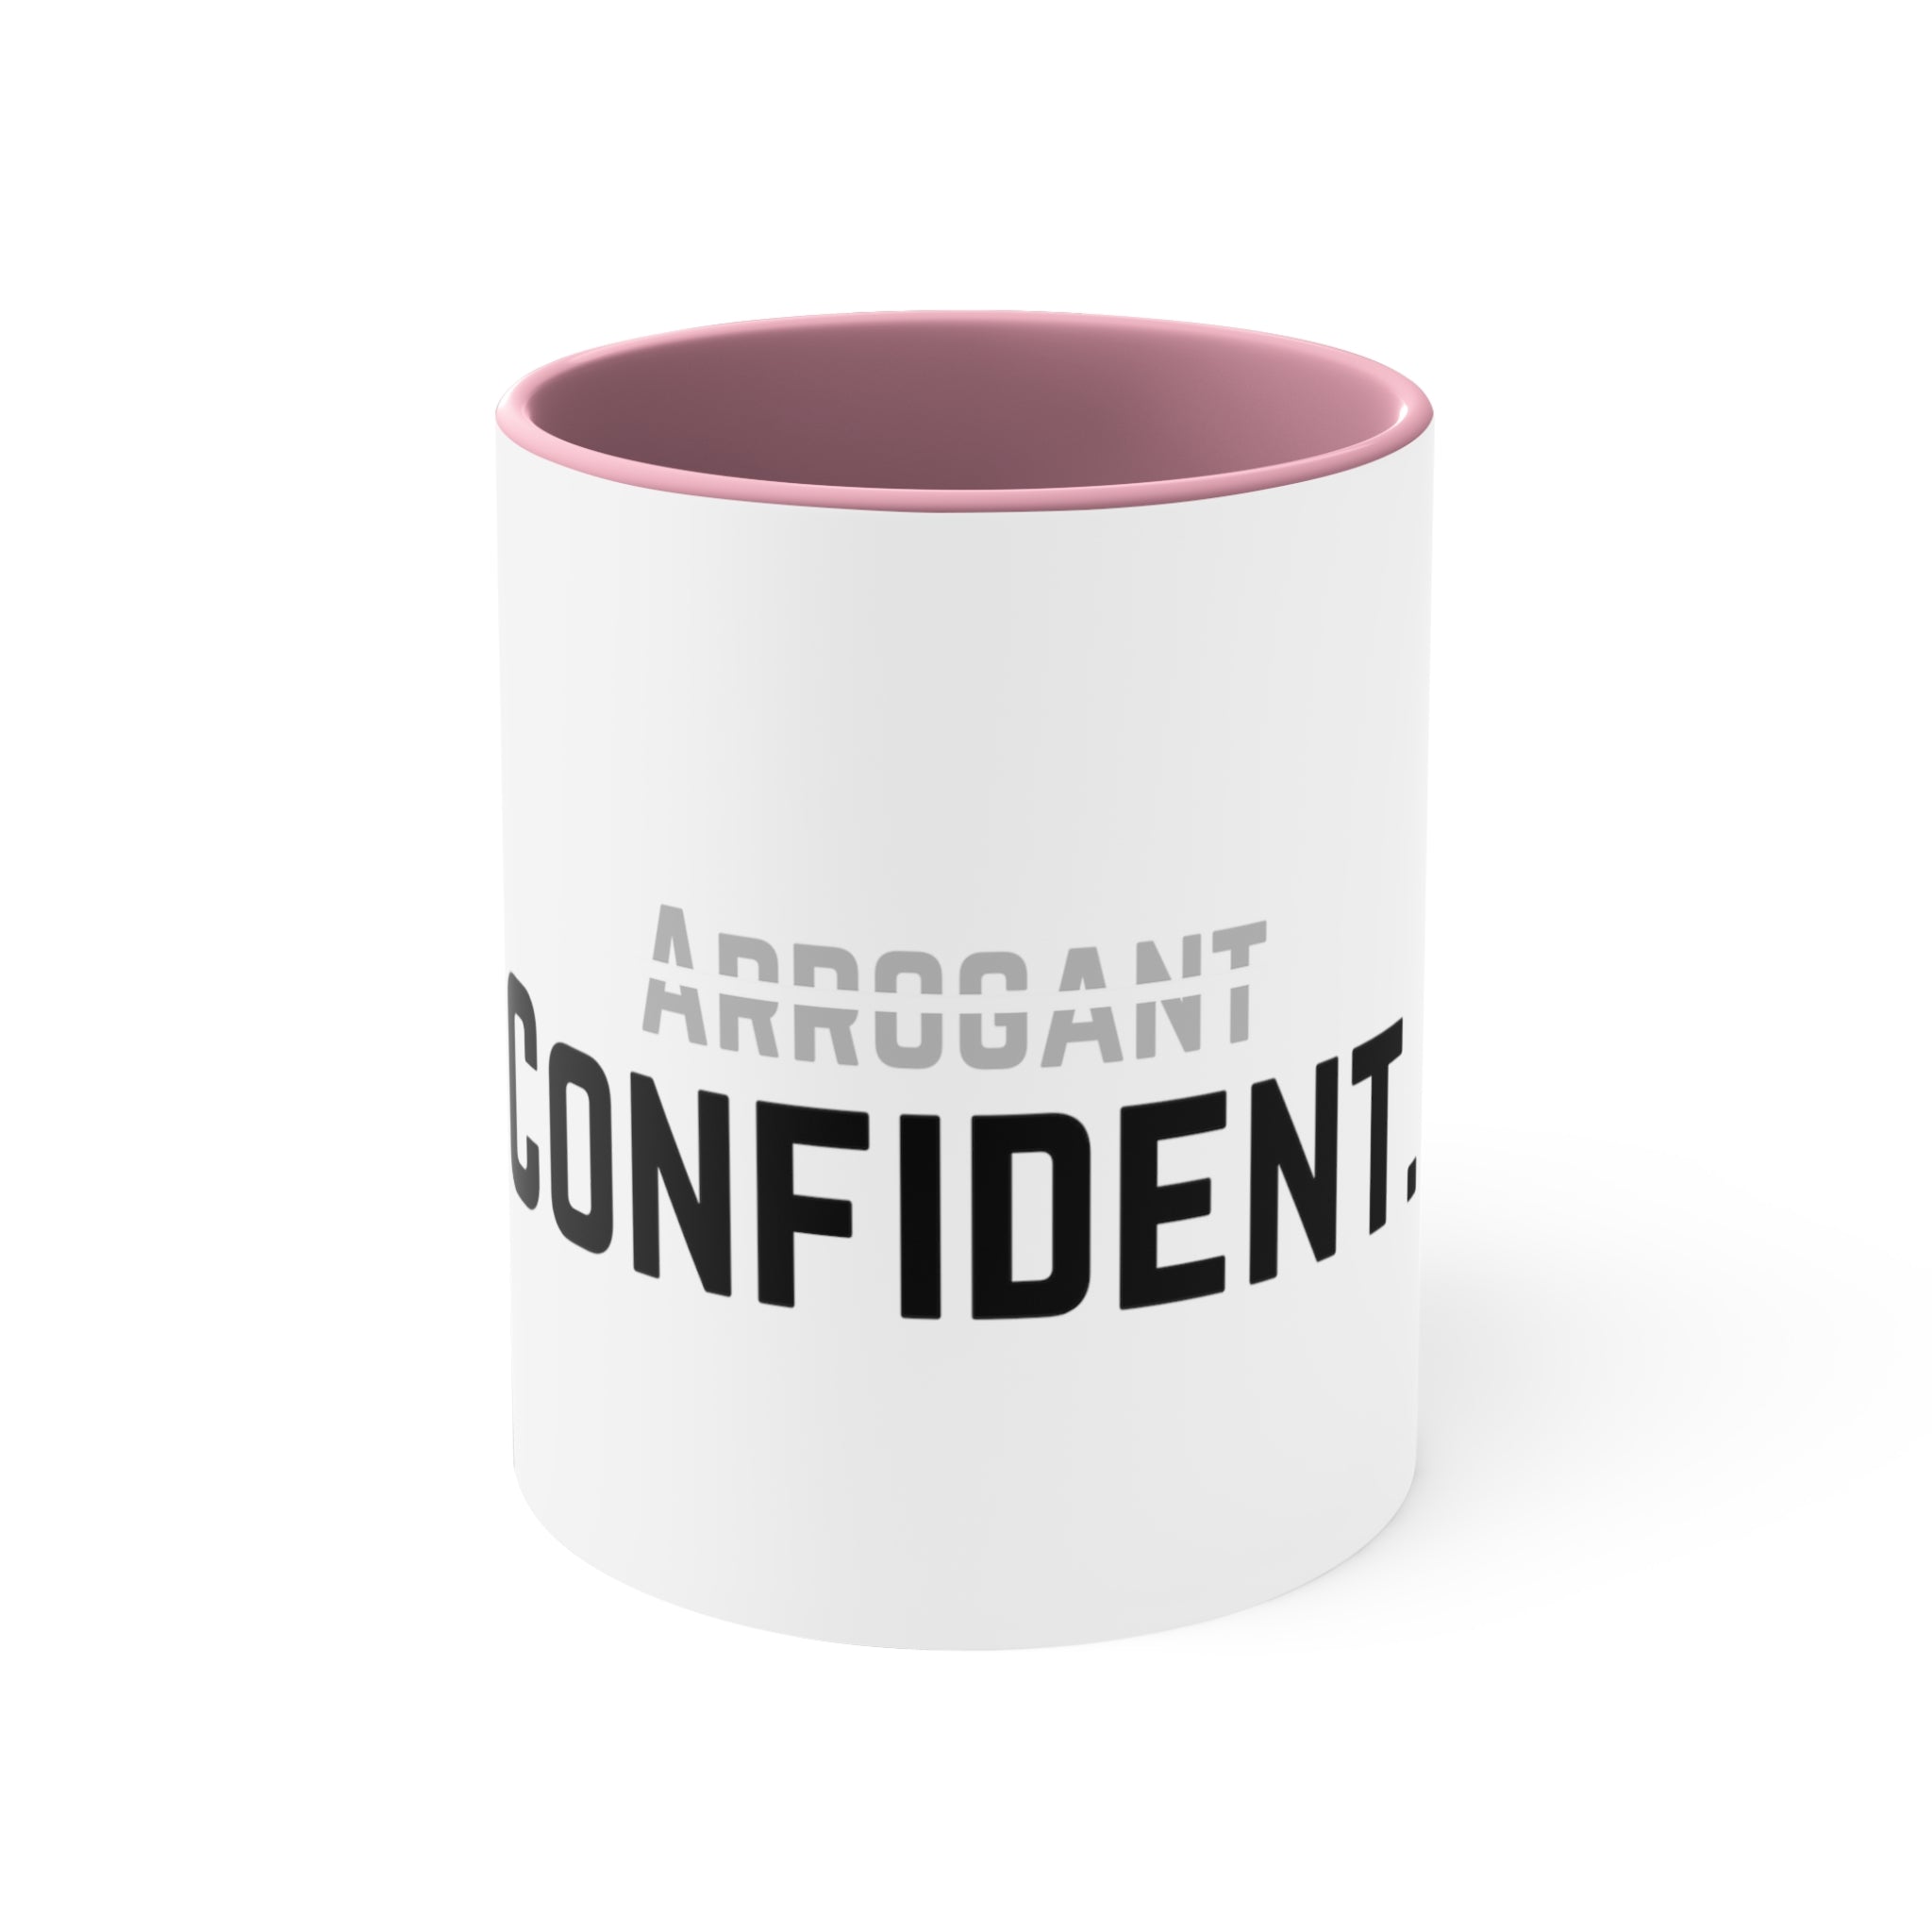 'Confident not Arrogant' - Accent Coffee Mug, 11oz